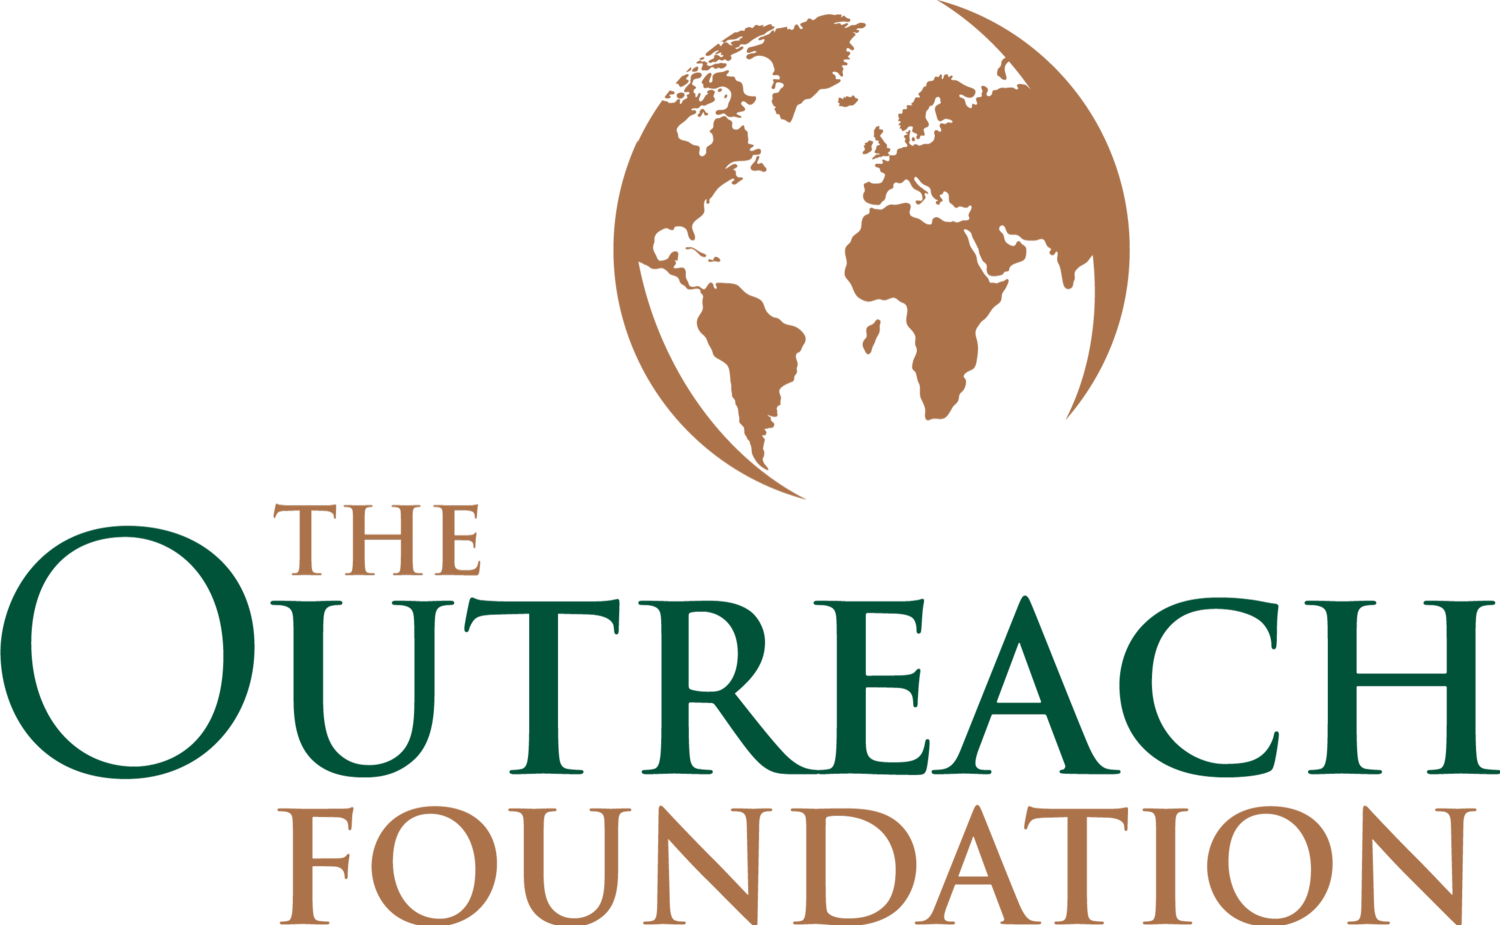 The Outreach Foundation